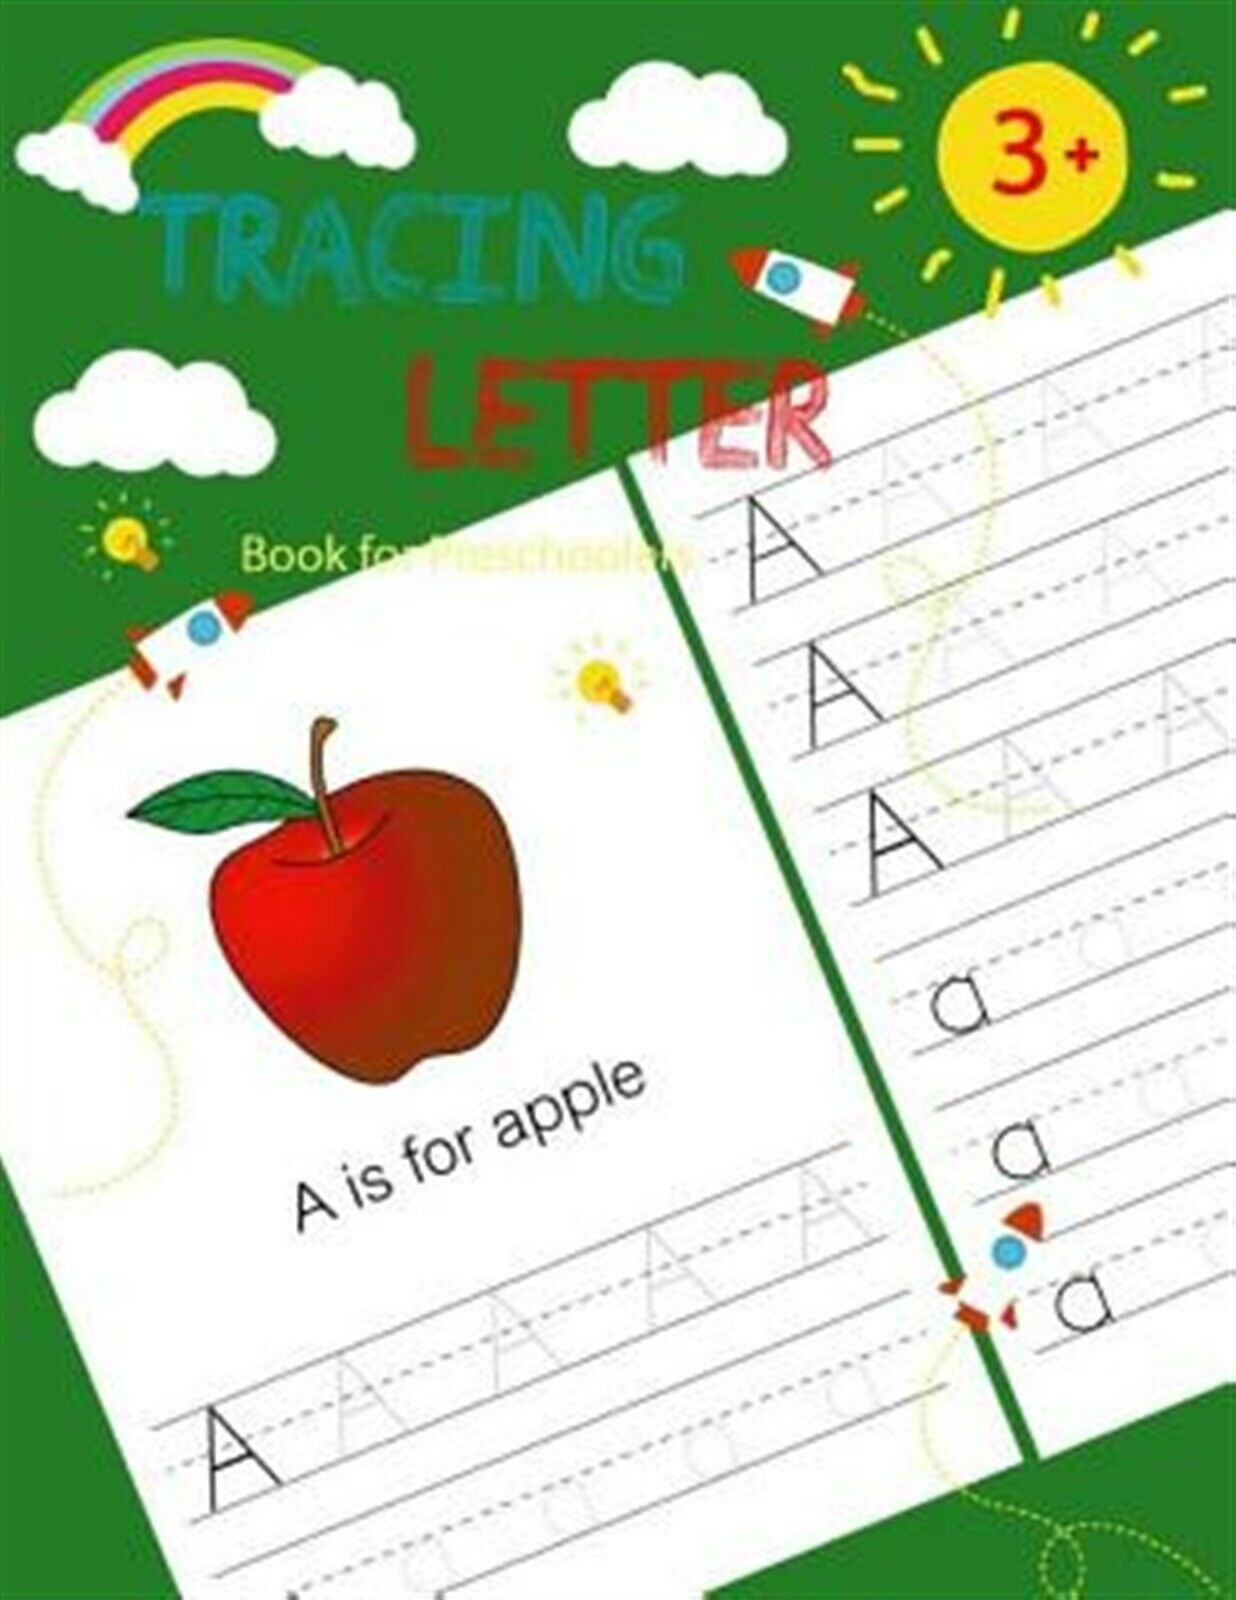 Details About Letter Tracing Book For Preschoolers Handwriting Workbook Pr Jk Studio Kids